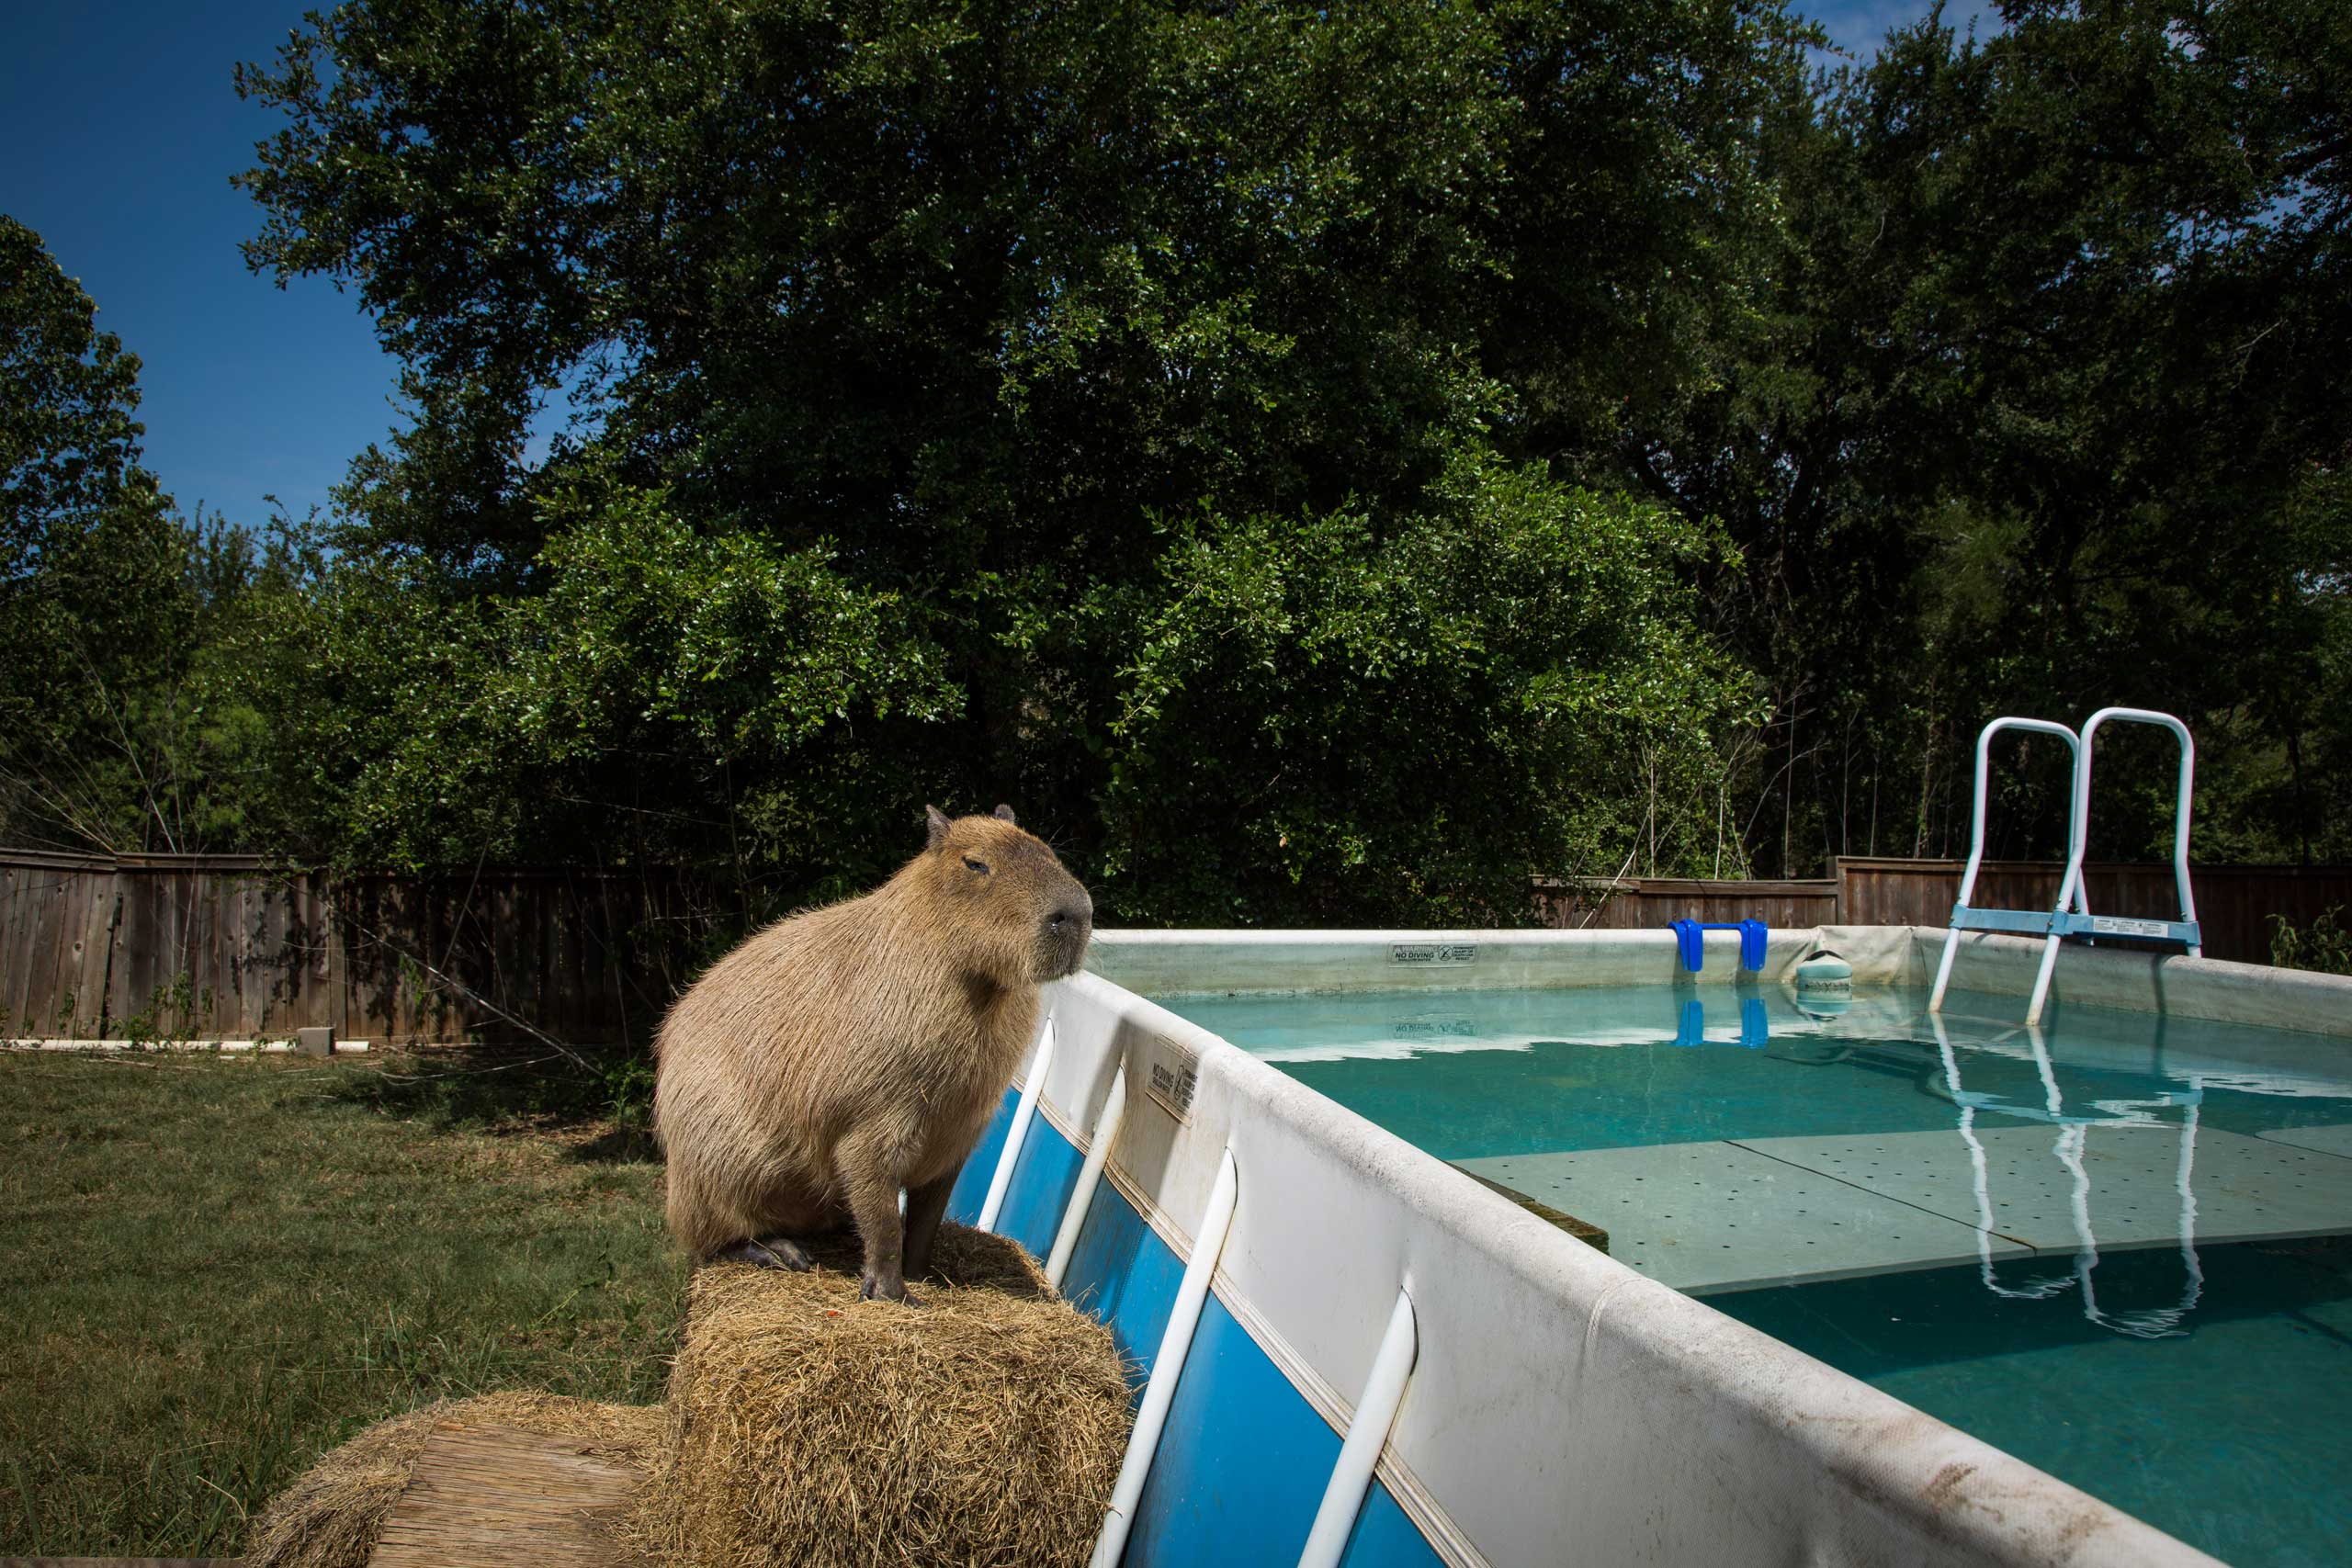 Garibaldi Rous, a 120 lb. three-year-old Capybara  before his morning swim. Texas, 2013.